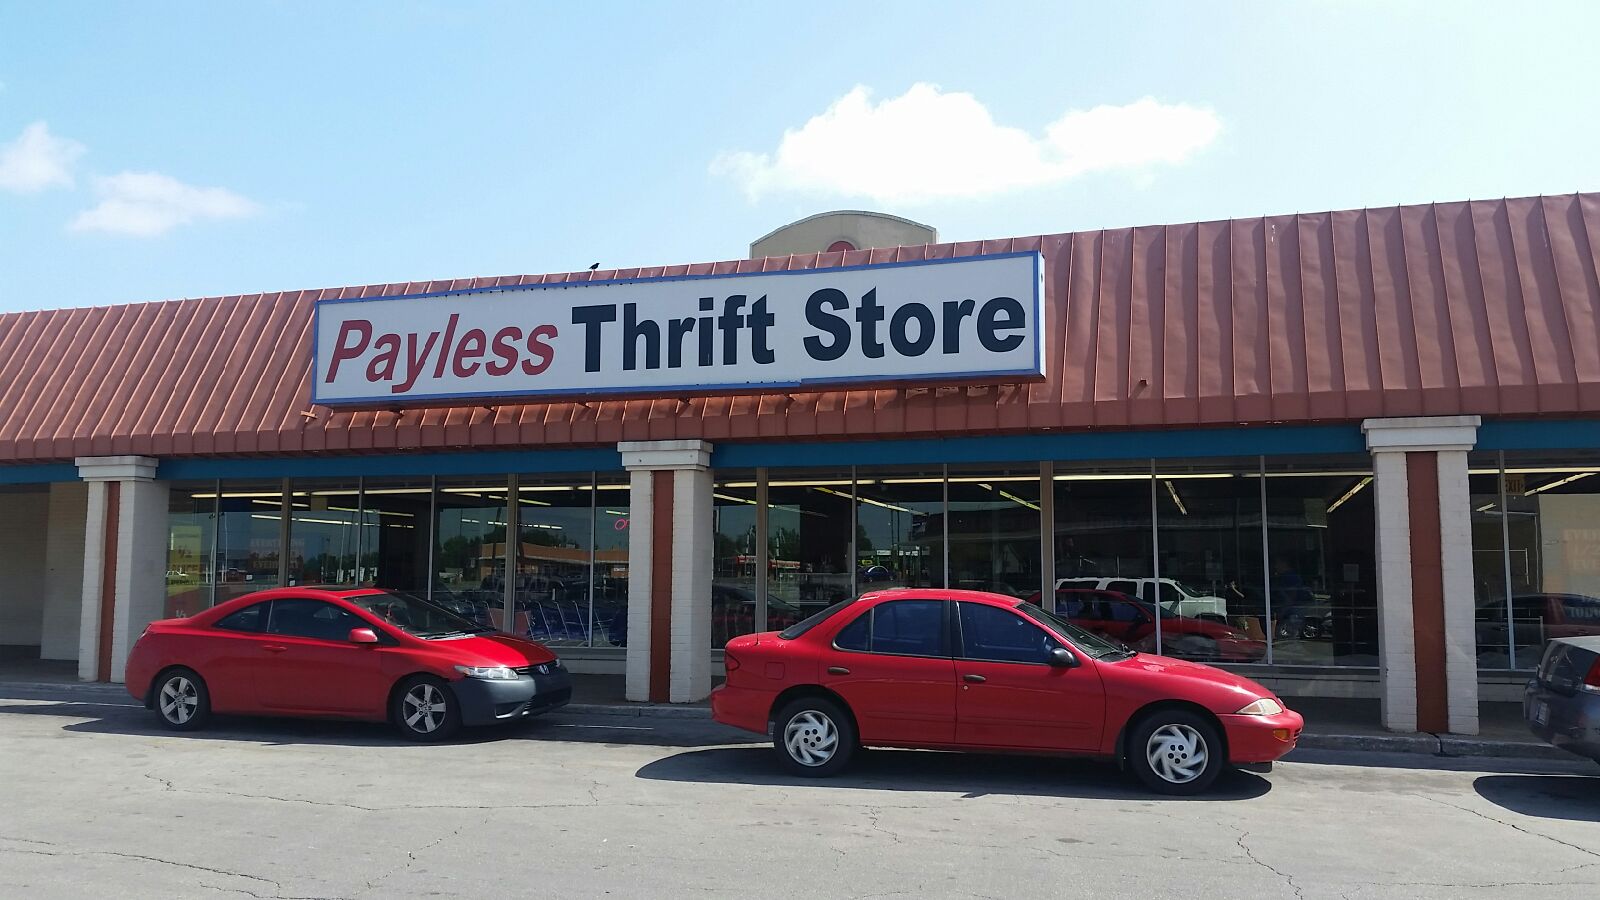 Payless Thrift Store